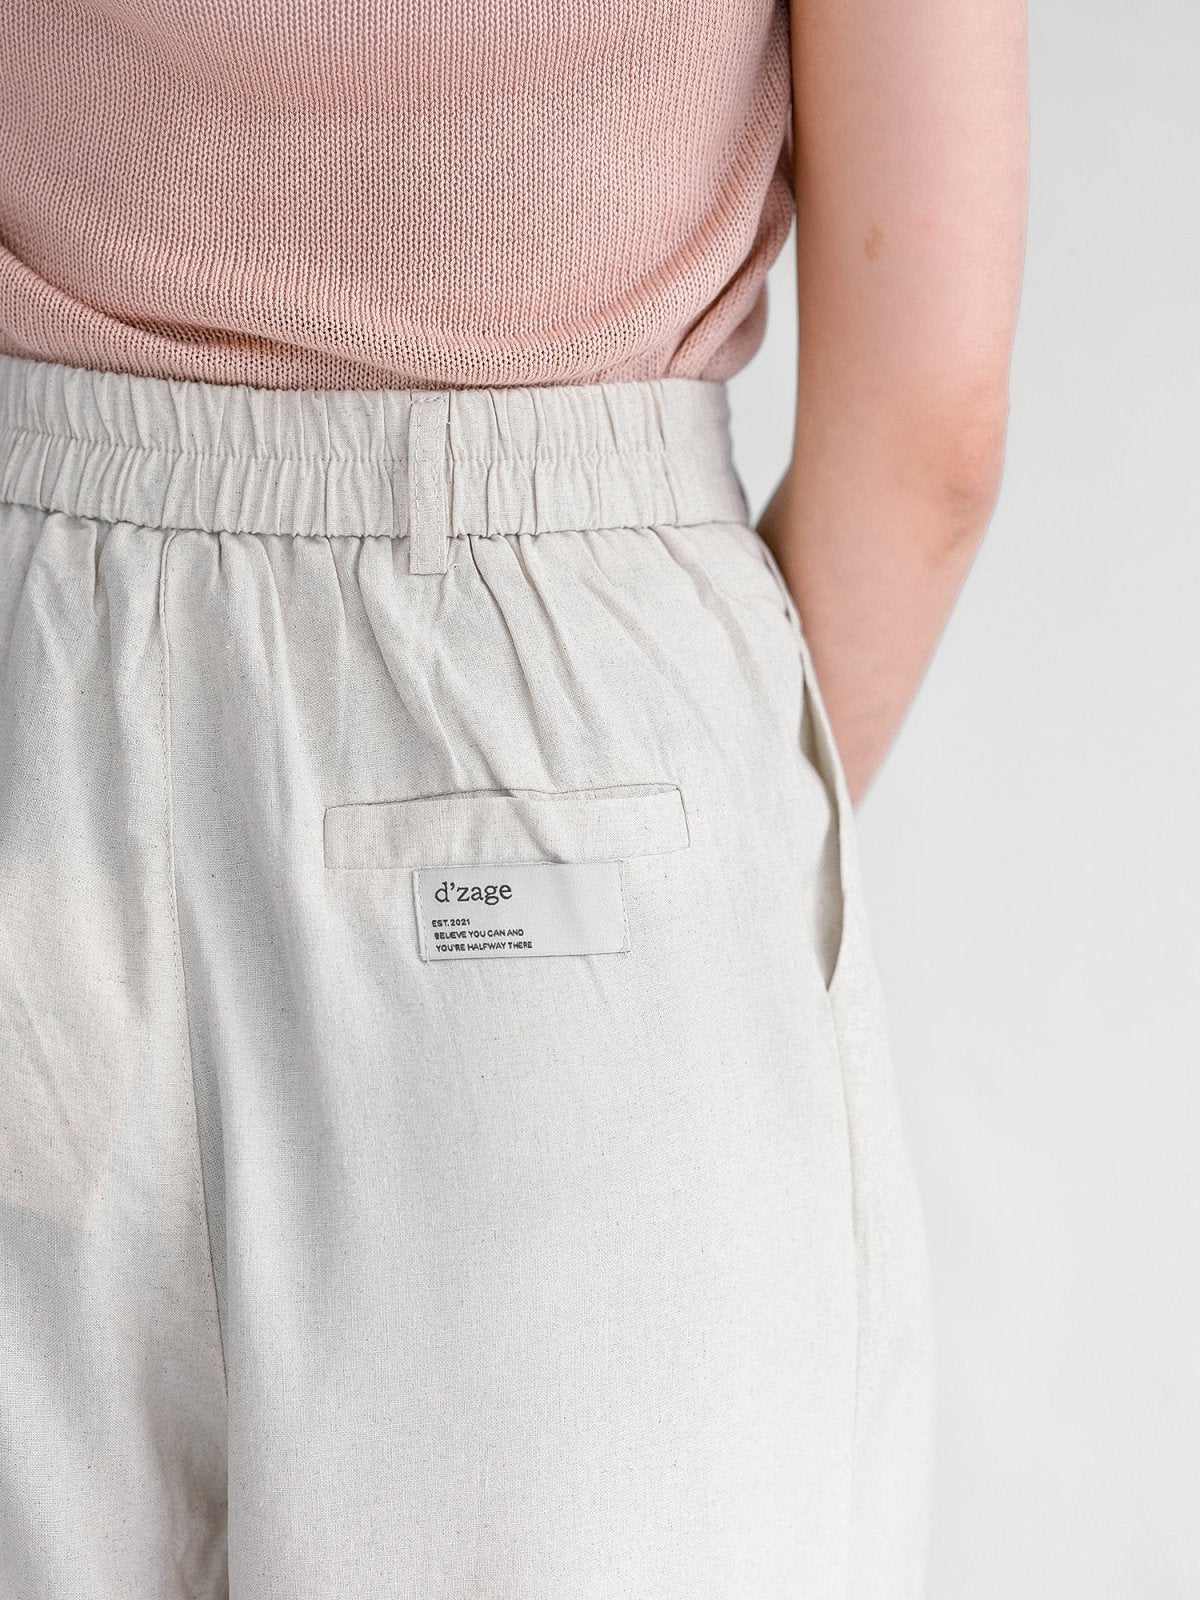 Paya Pleated Linen Cotton Pants - DAG-G-220172IvoryS - Linen - S - D'ZAGE Designs